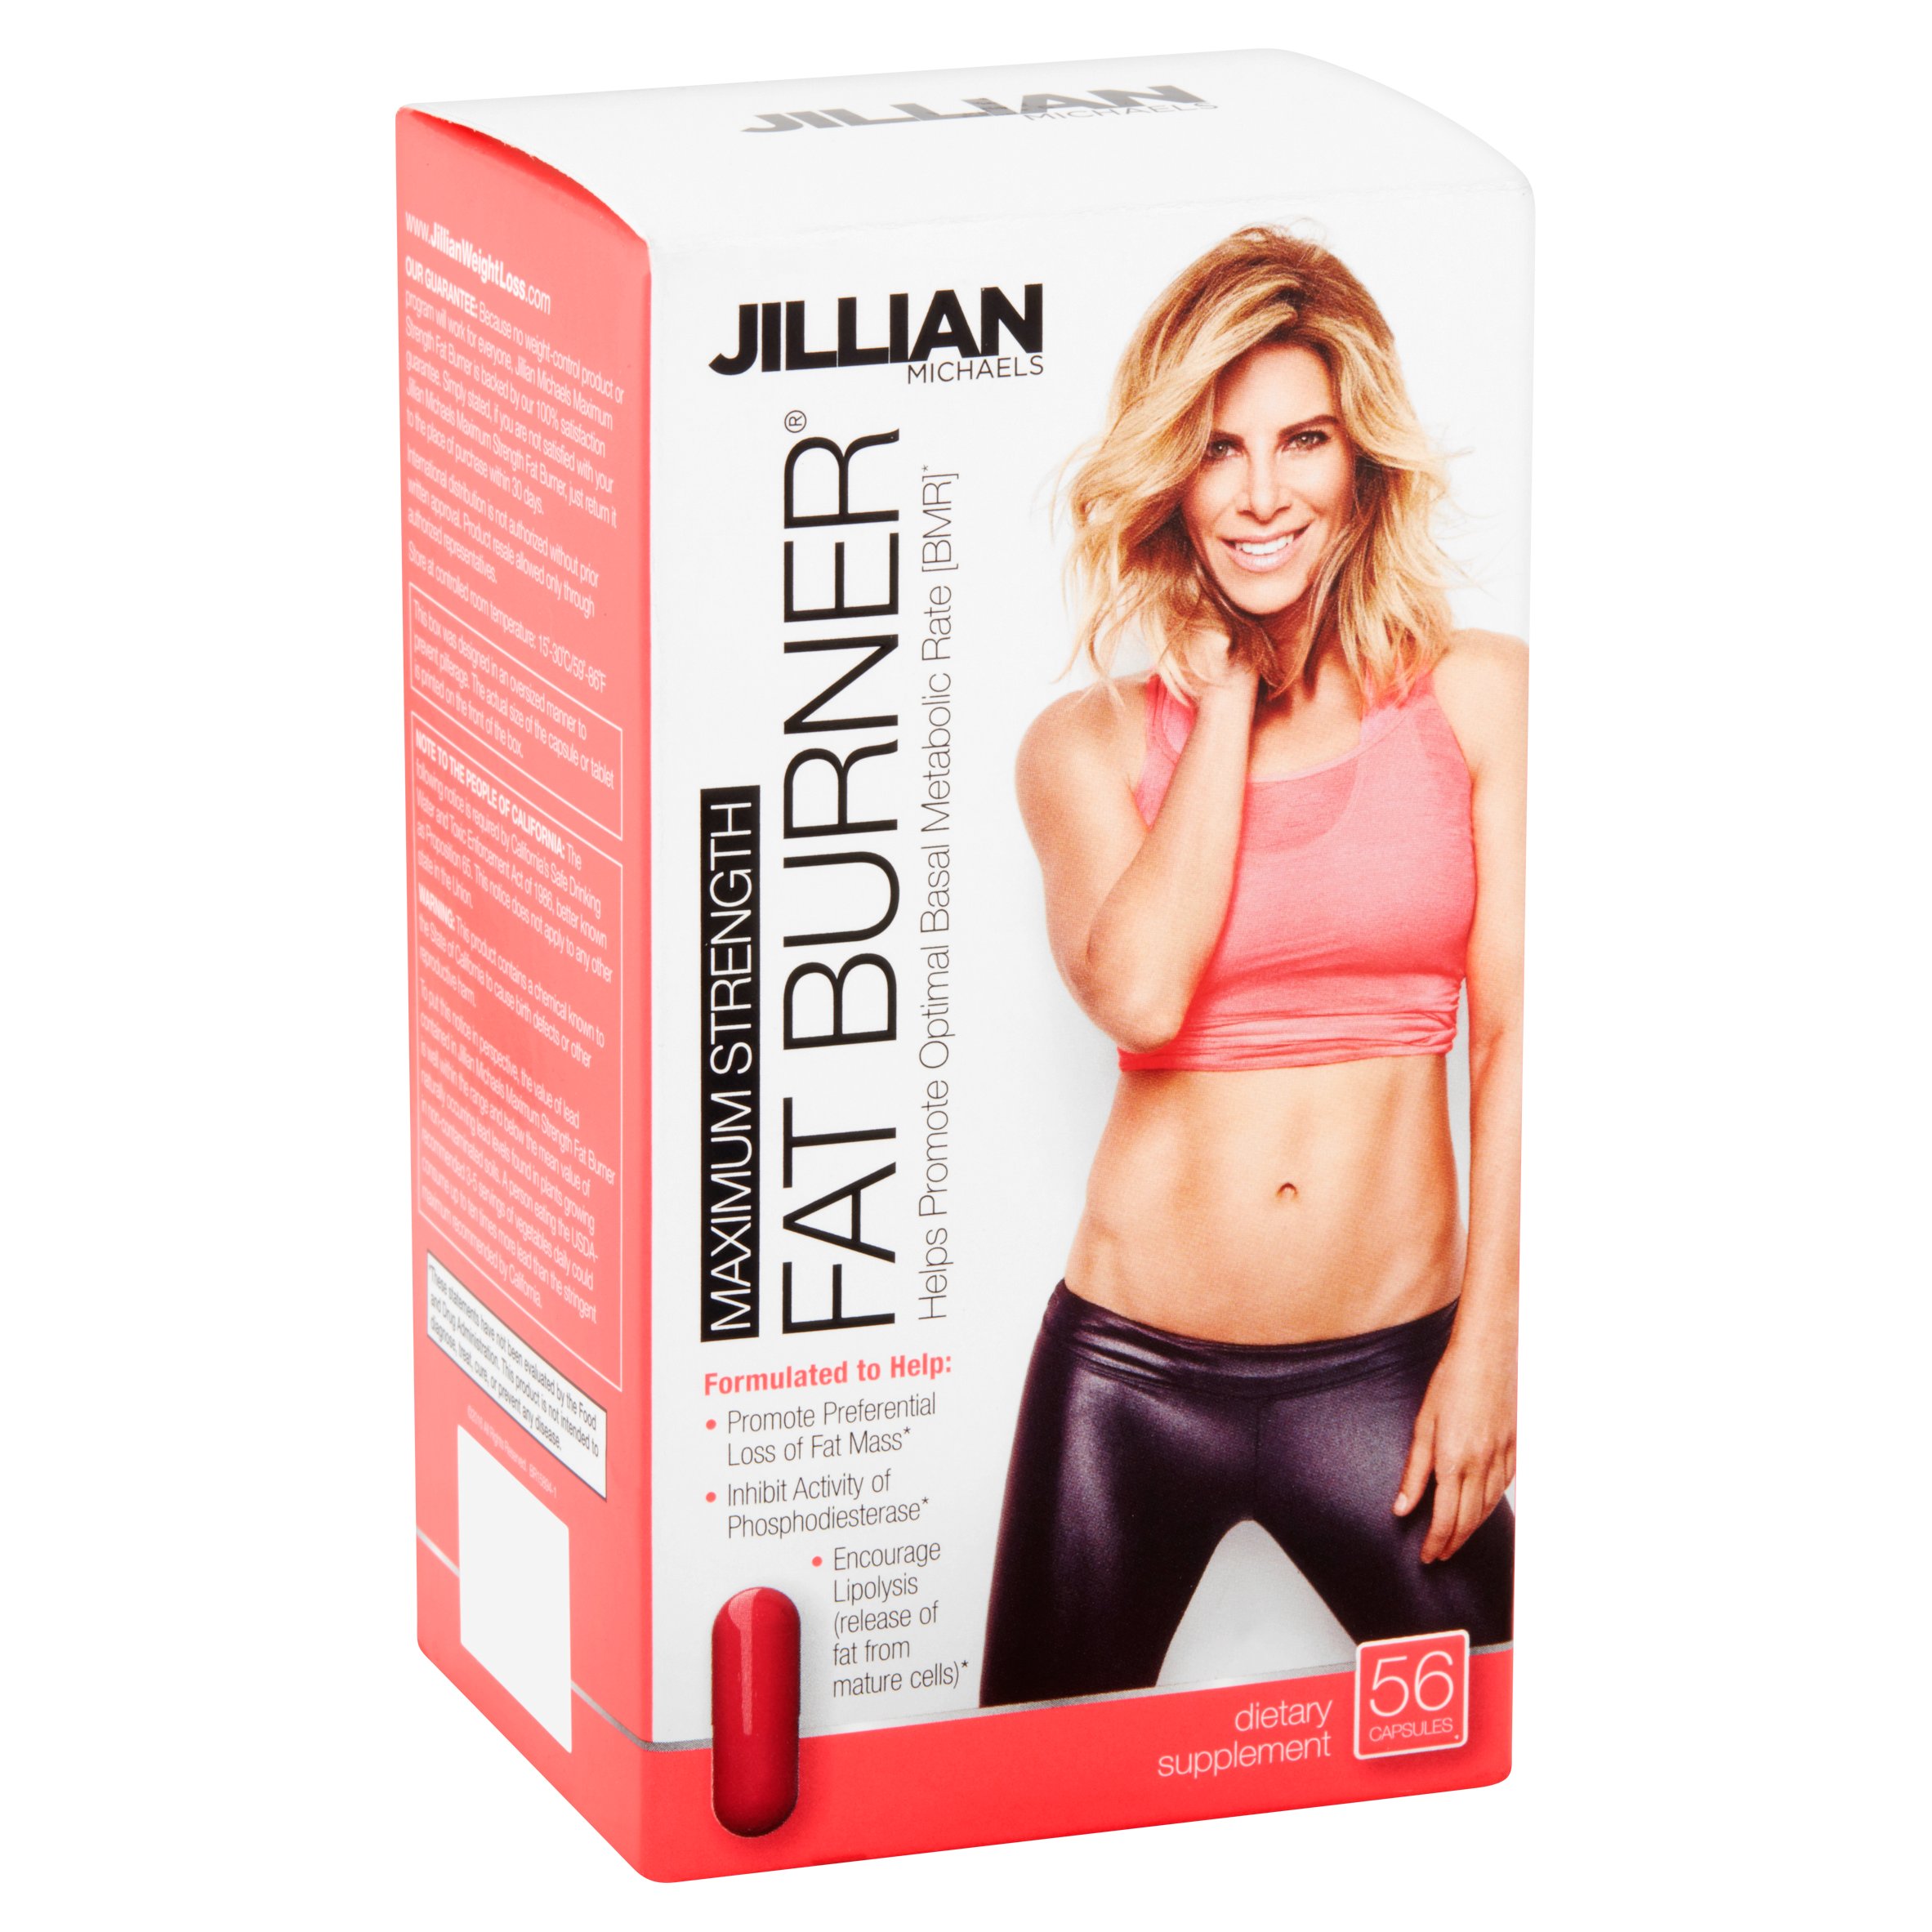 Jillian Michaels Maximum Strength Fat Burner Weight Loss Capsules, 56 Ct - image 2 of 4